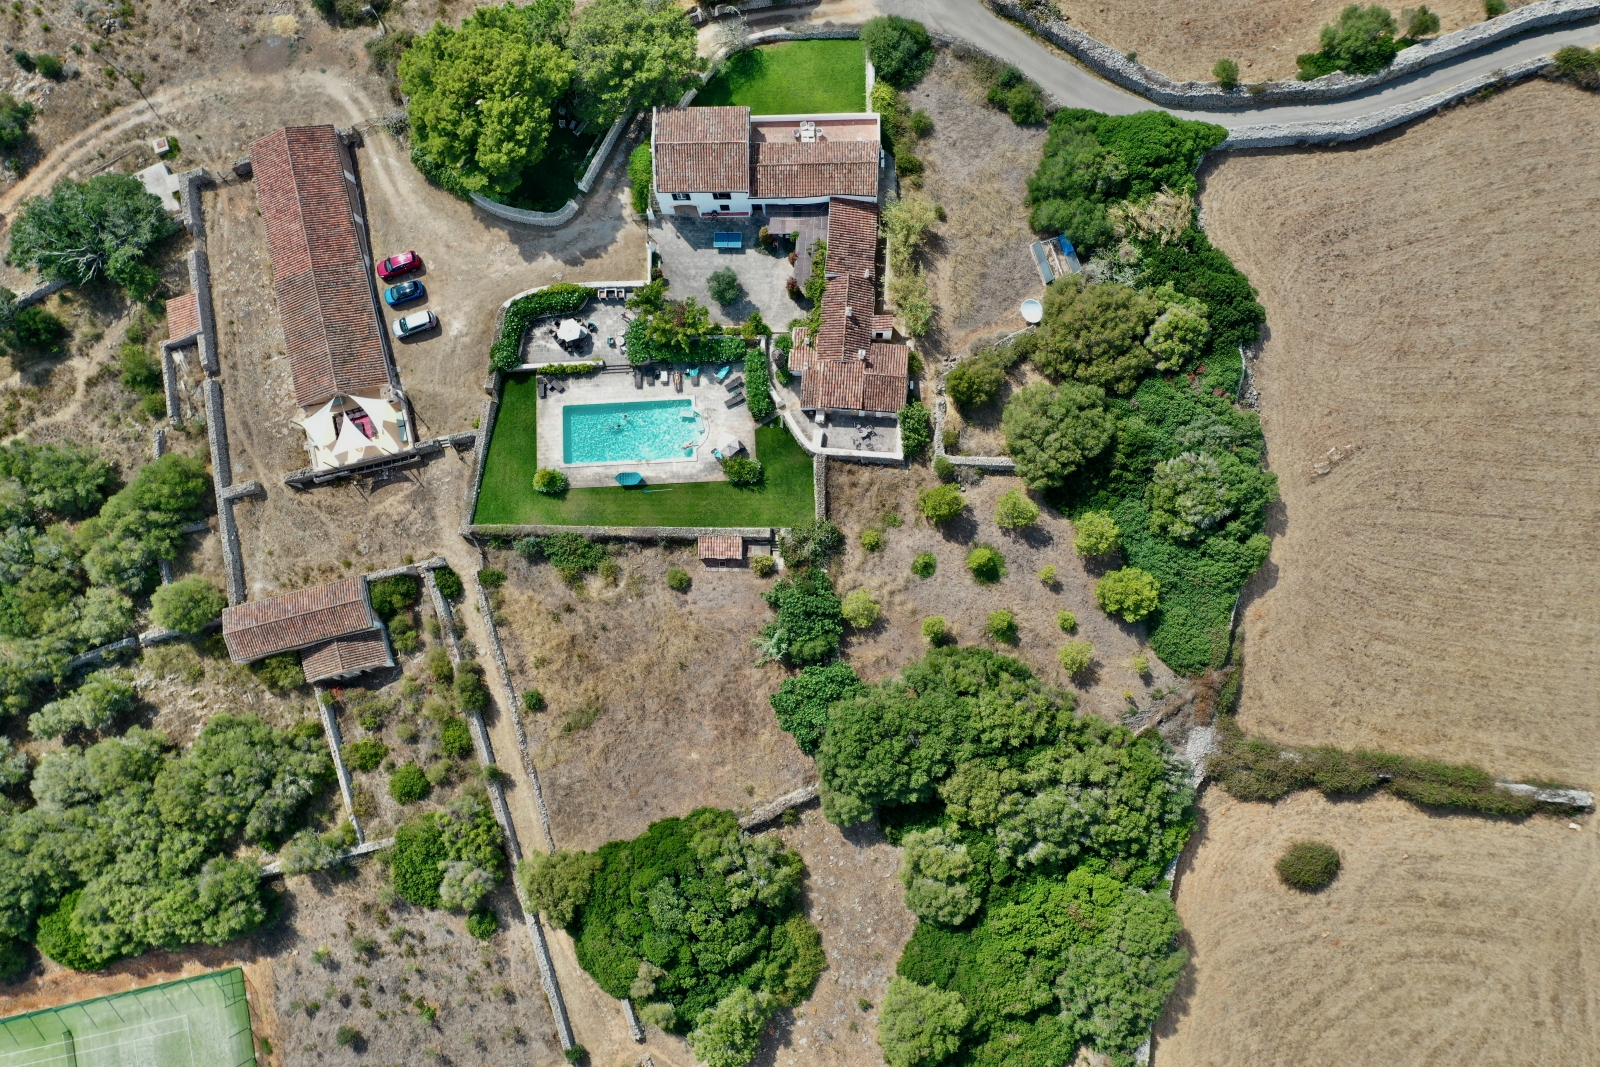 Aerial view of villa, pool, garden and tennis court at Finca Tortuga in Menorca, Spain